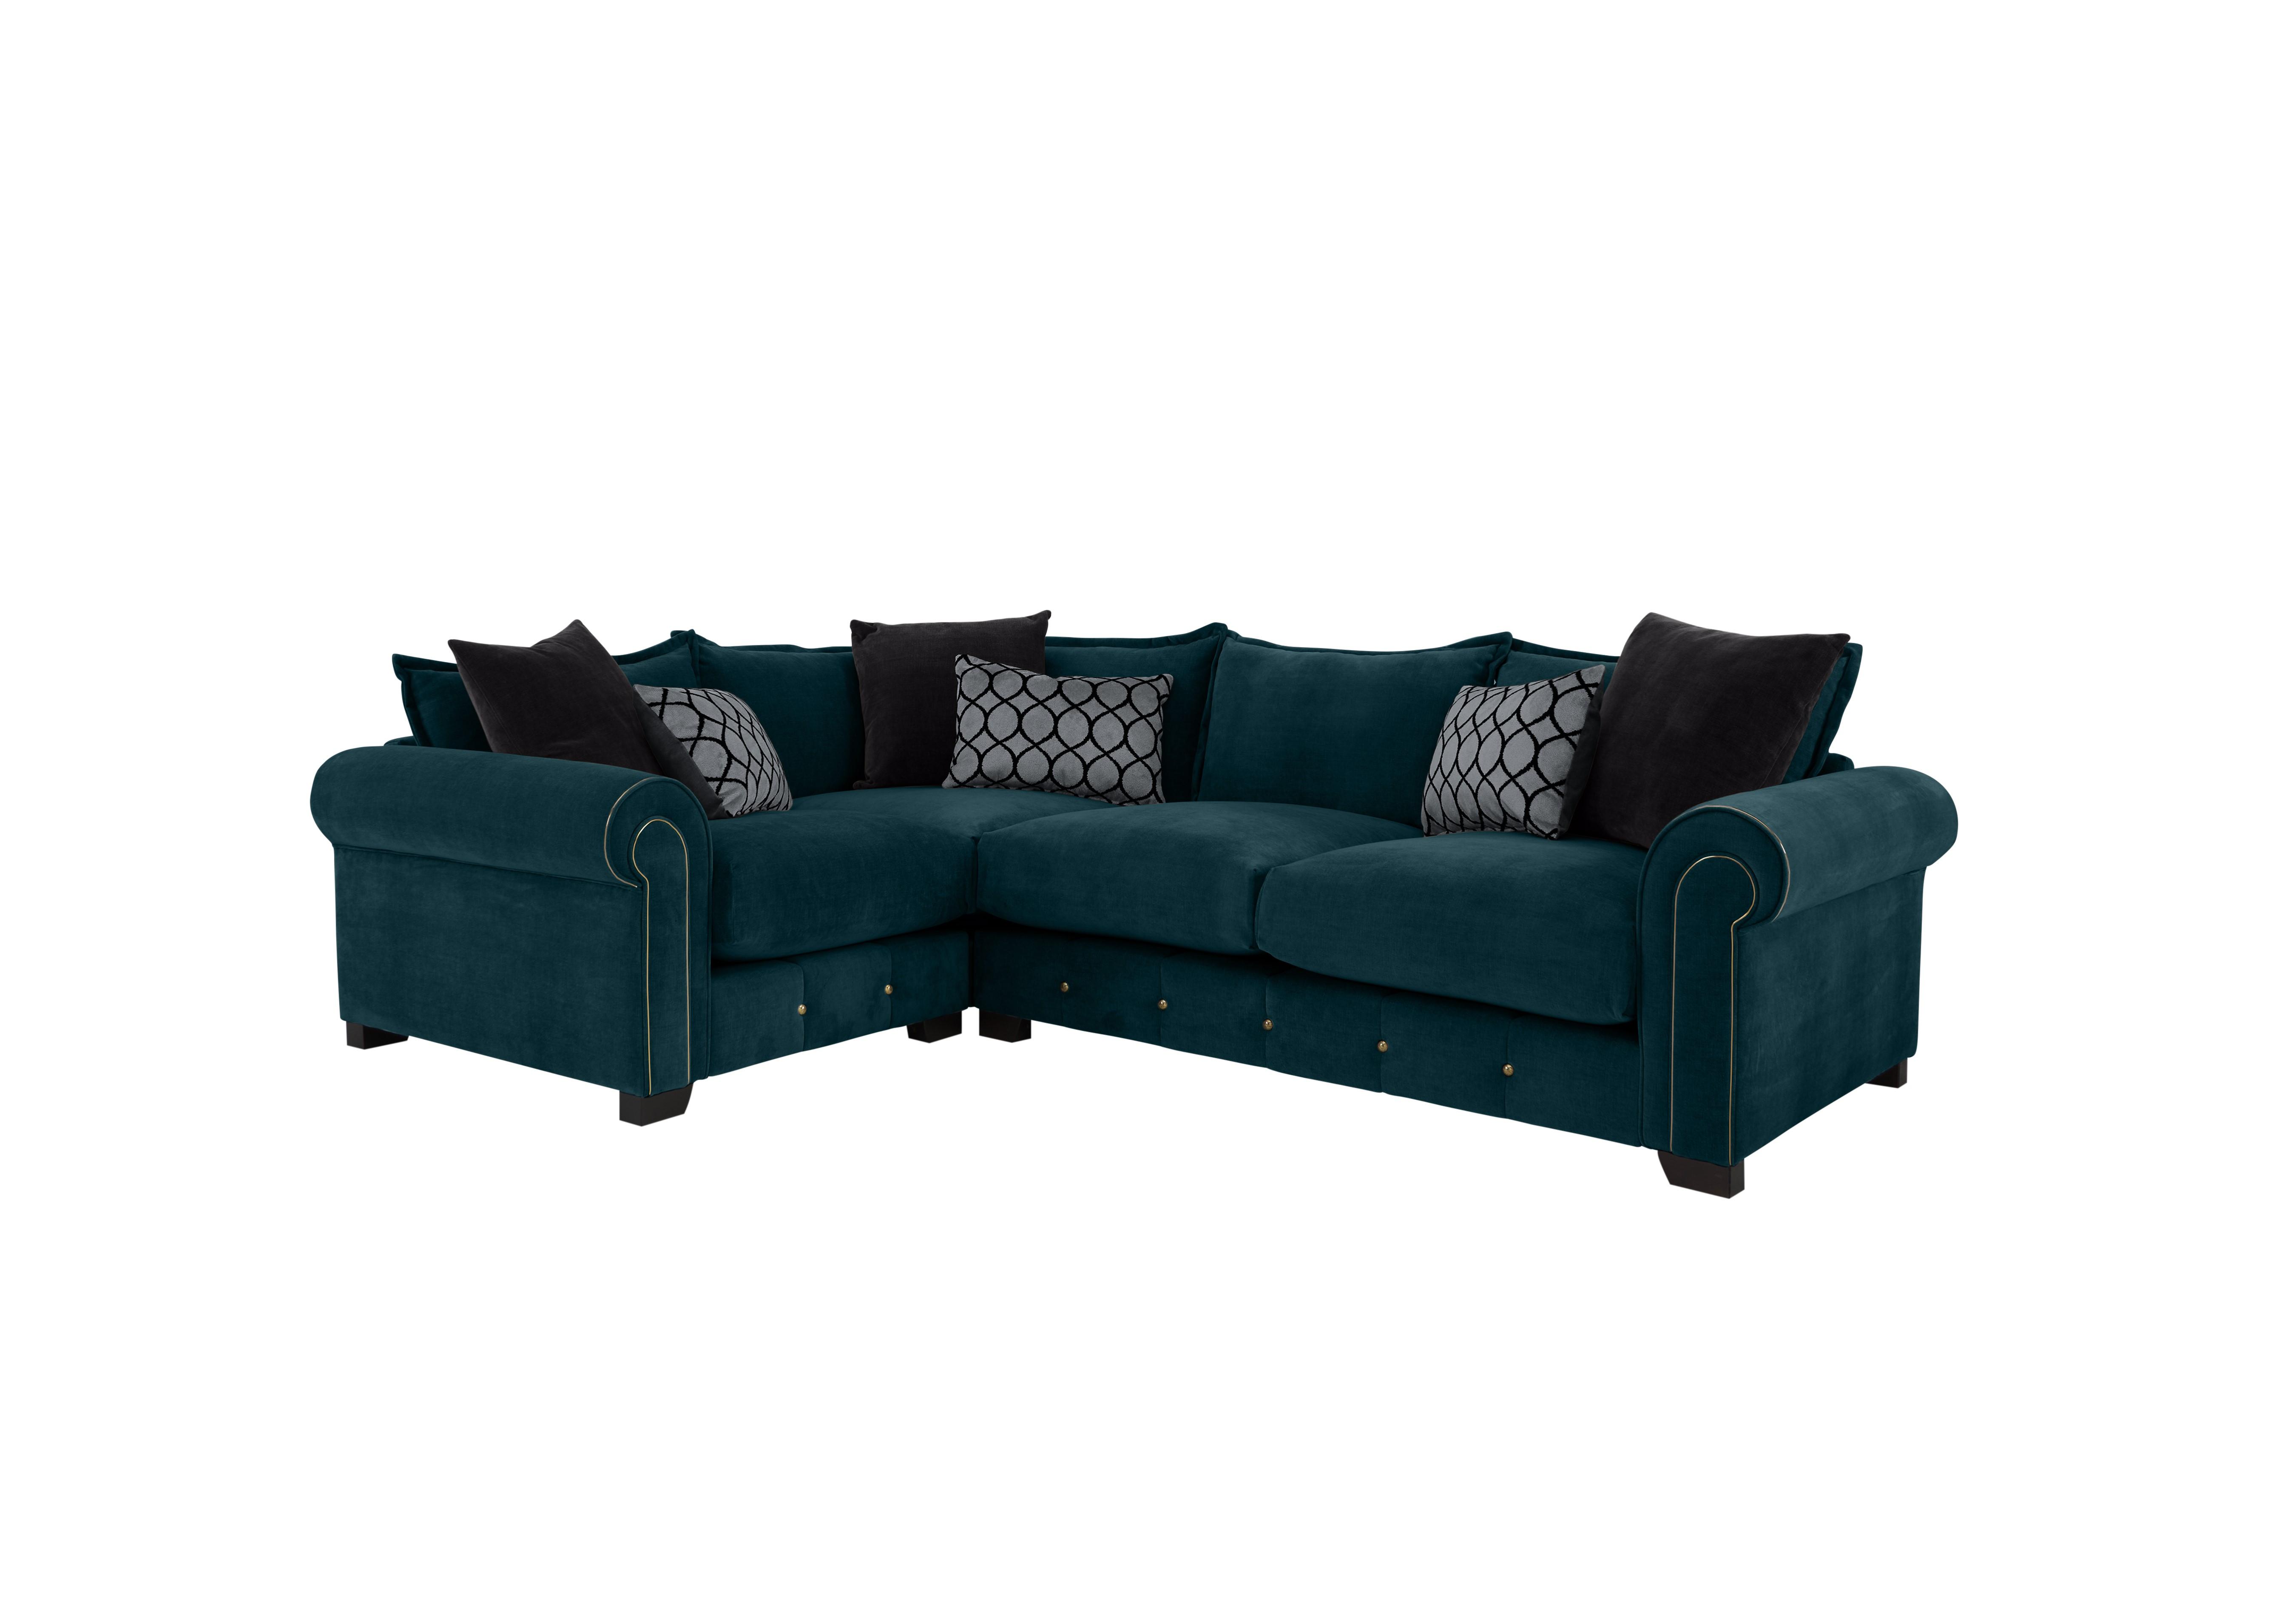 Sumptuous Medium Fabric Corner Sofa in Chamonix Teal Dk/Gold on Furniture Village